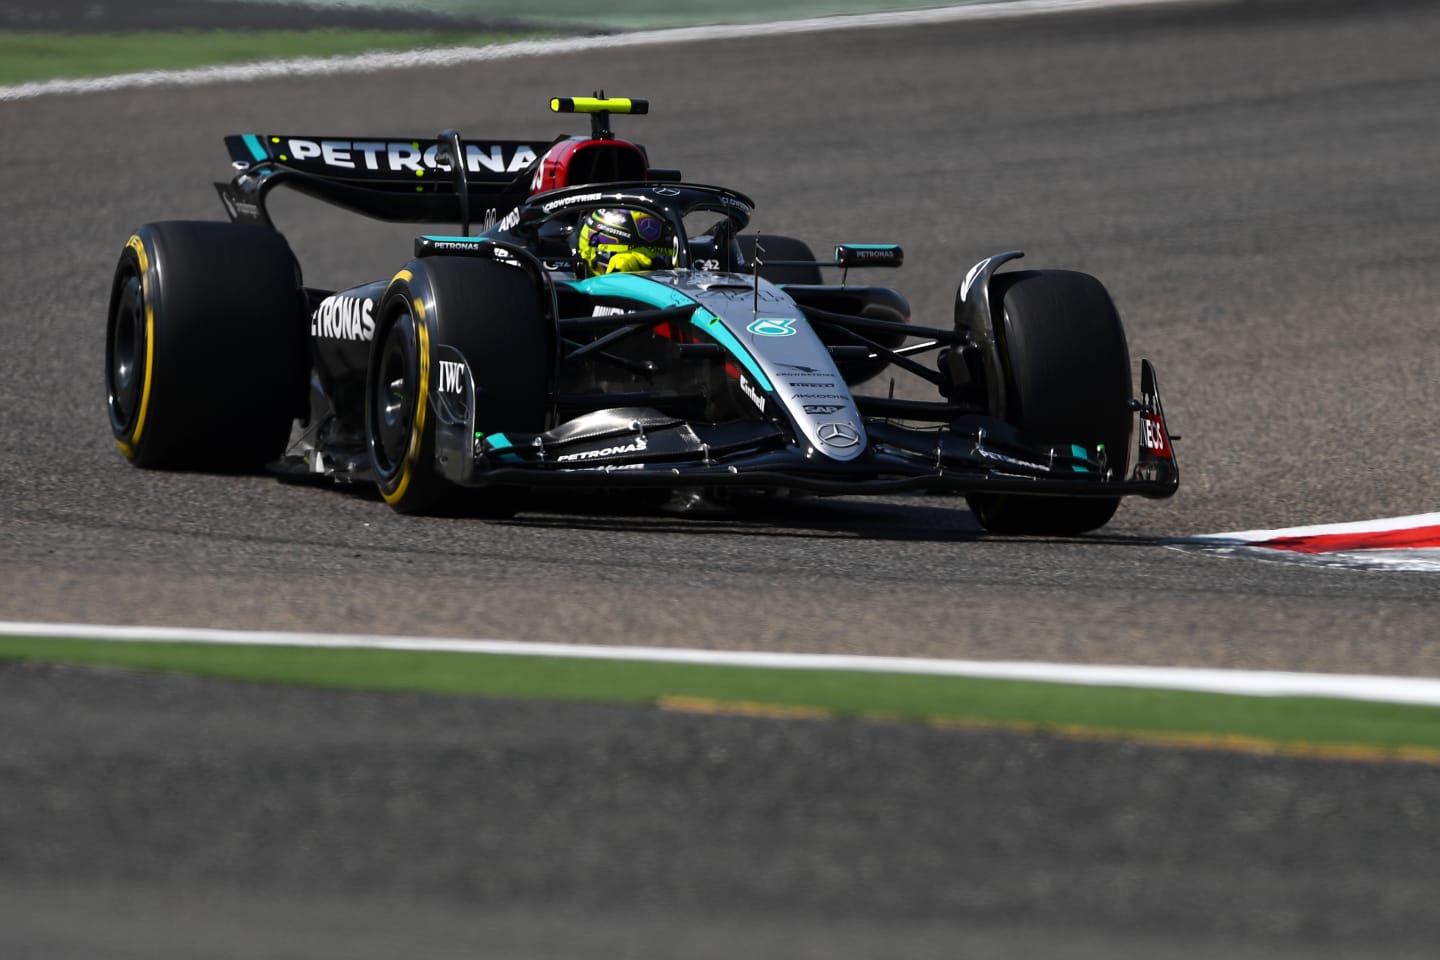 BAHRAIN, BAHRAIN - FEBRUARY 23: Lewis Hamilton of Great Britain driving the (44) Mercedes AMG